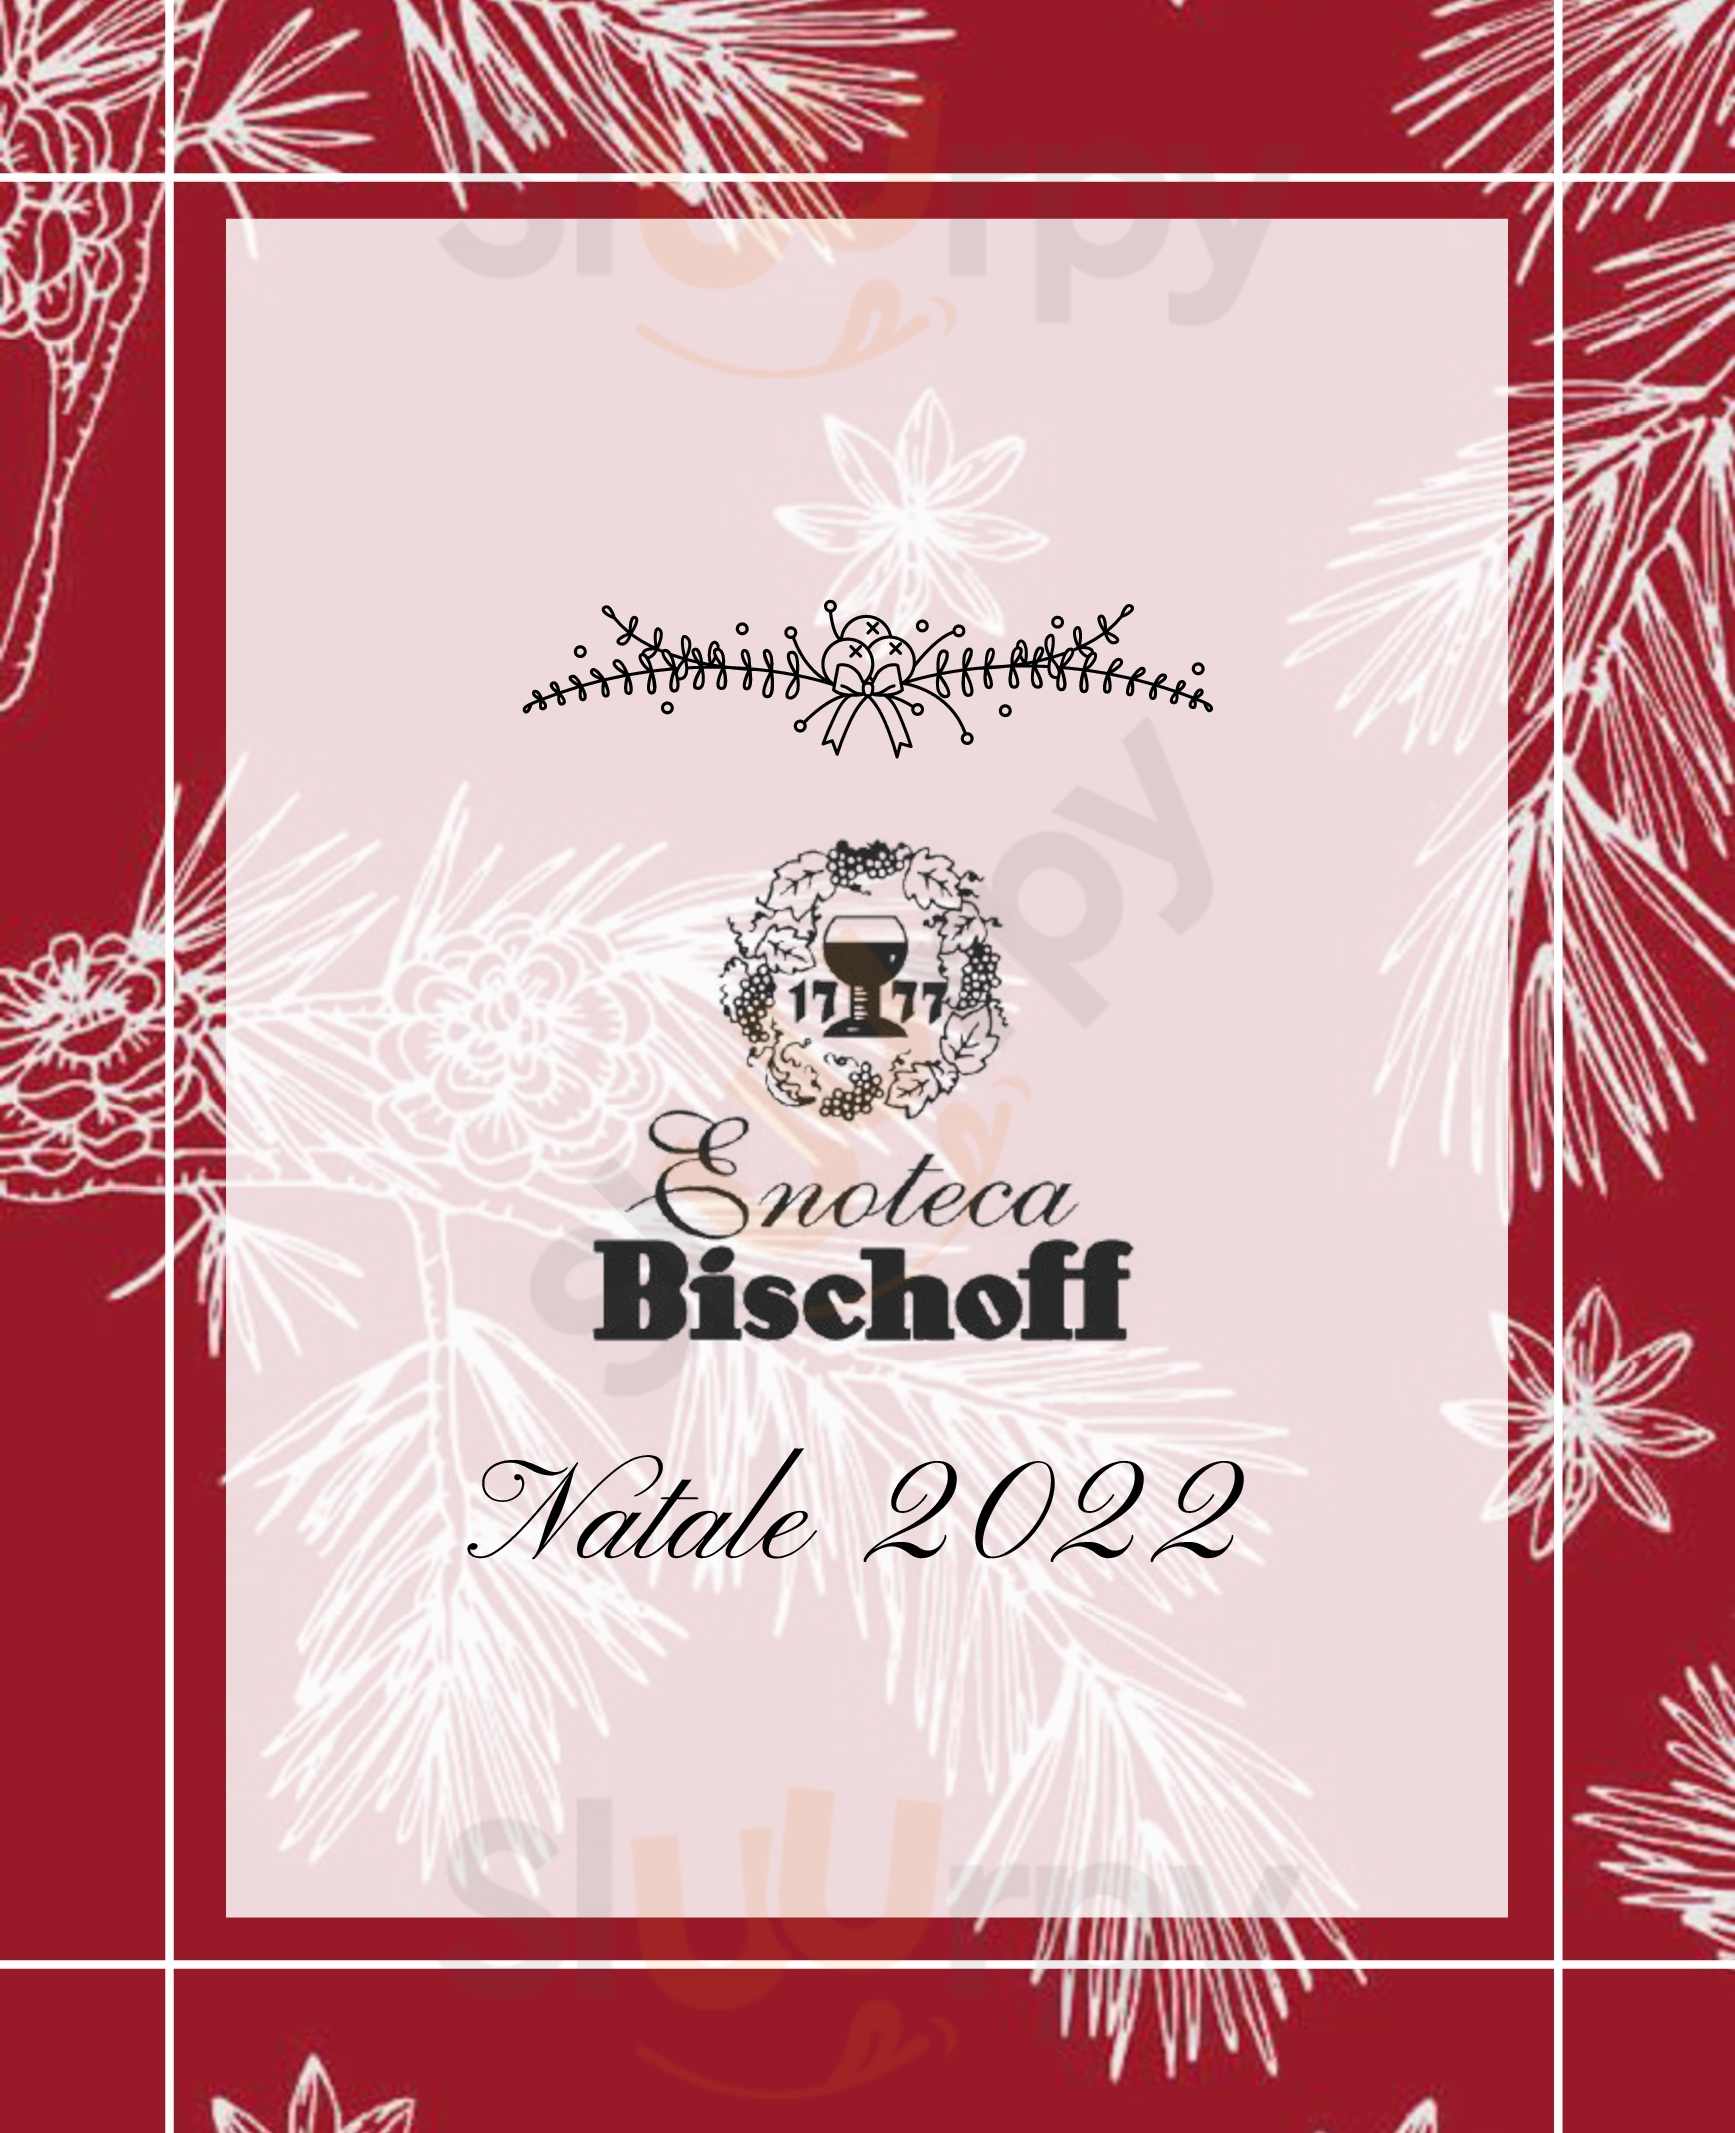 Enoteca Wine Bar Bischoff Trieste menù 1 pagina